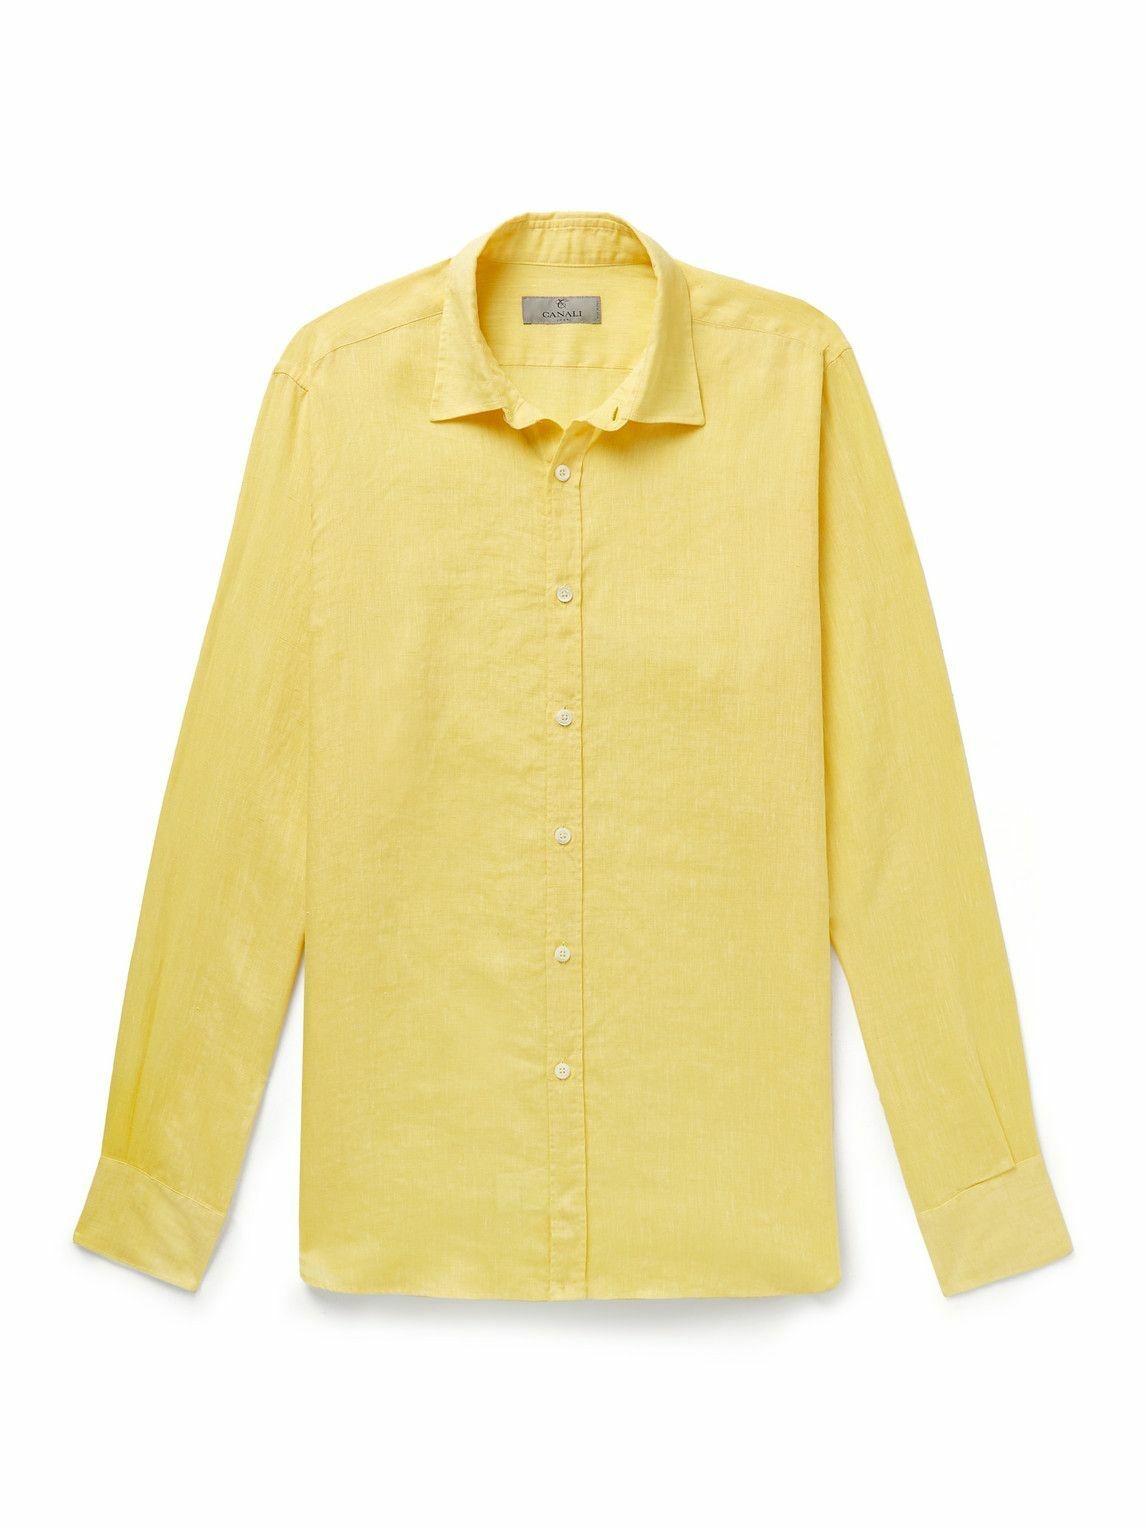 Canali - Linen Shirt - Yellow Canali